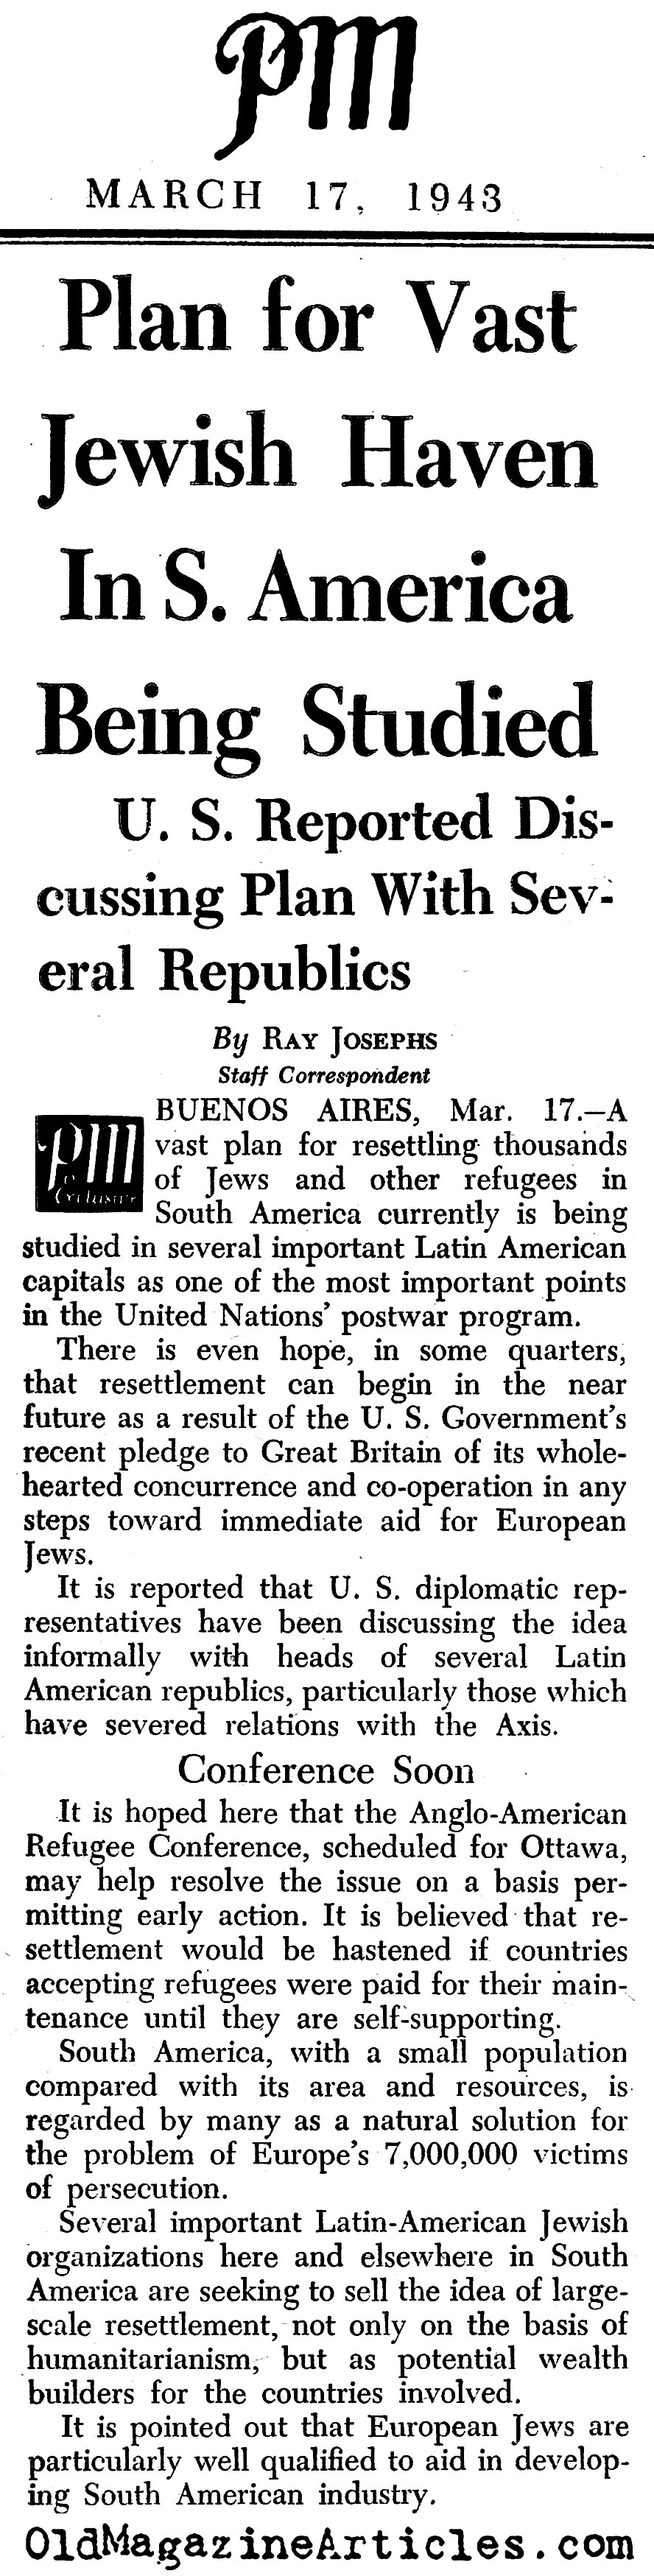 Establishing a Jewish Homeland - But Not In Israel (PM Tabloid, 1943)